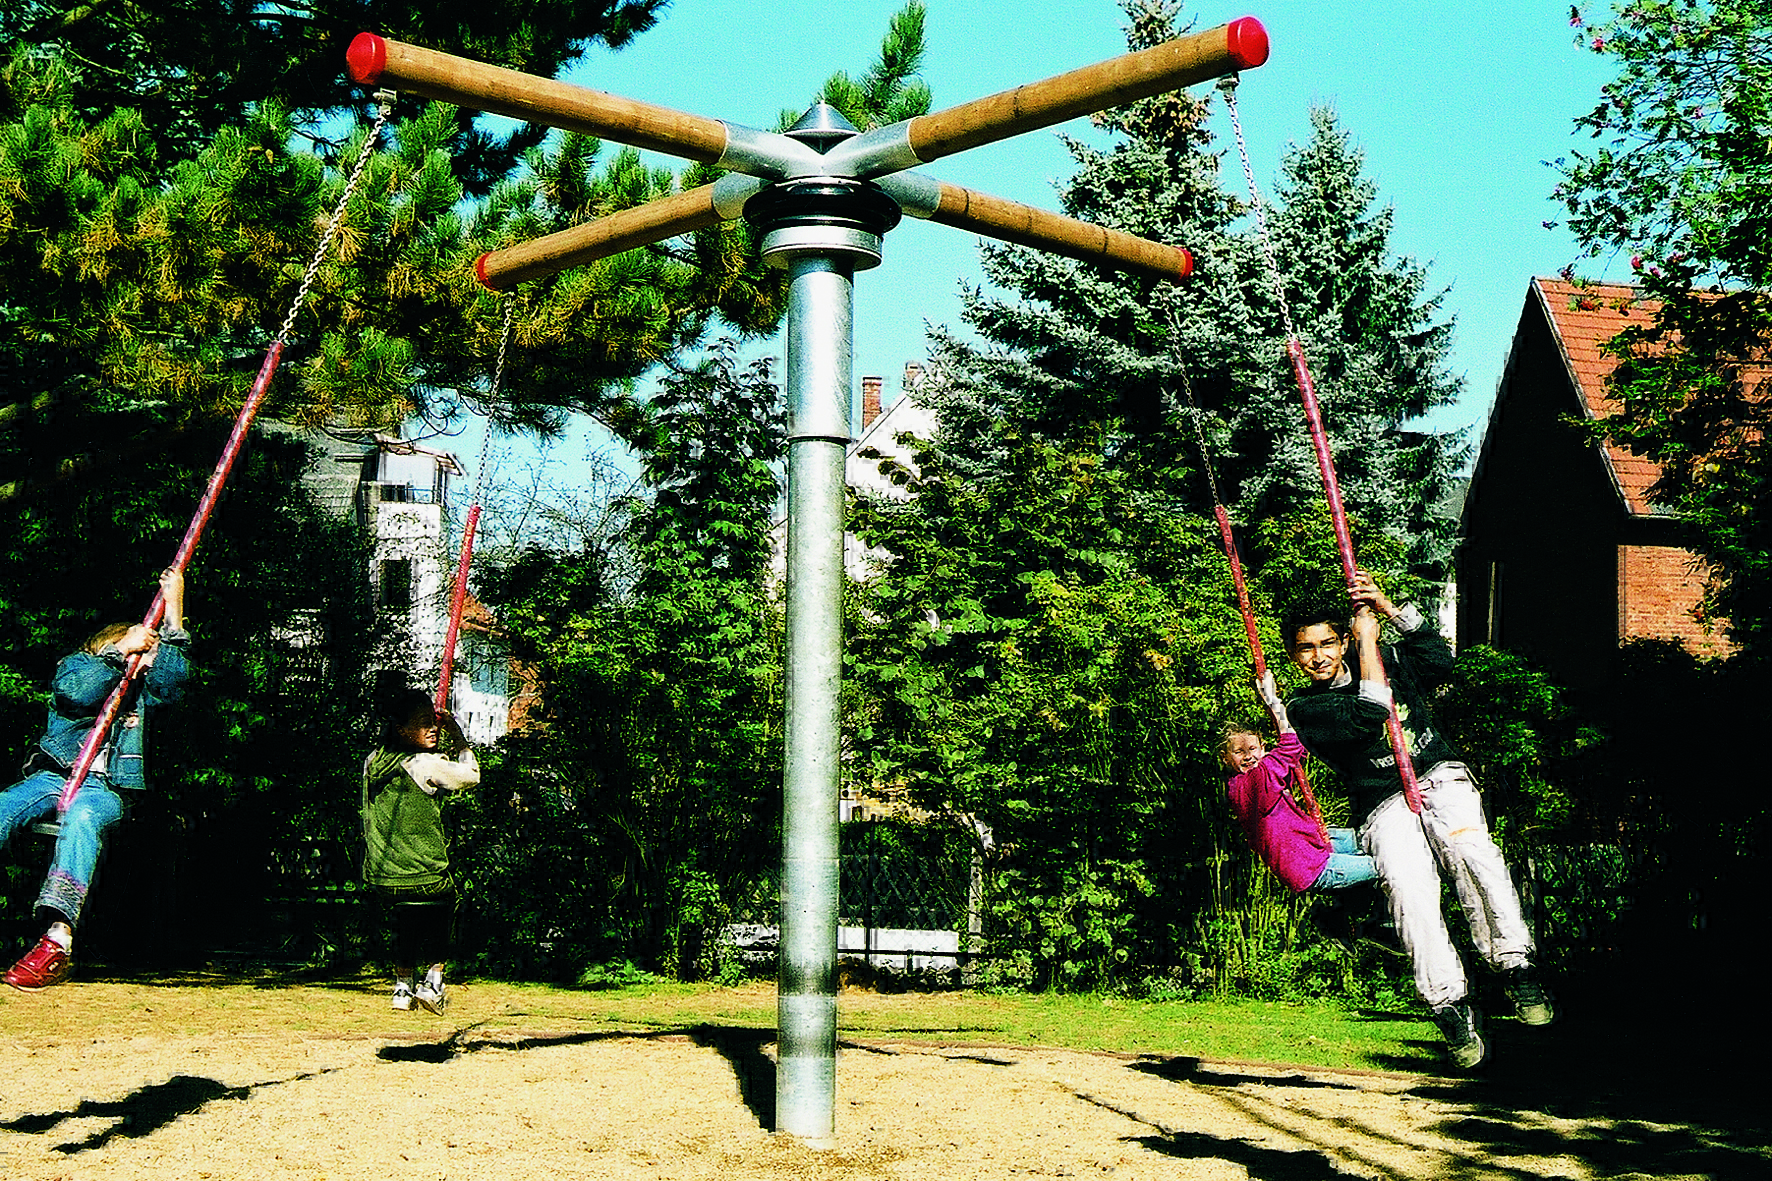 Turkuaz Park | Rotating Seesaw Monkey Swing